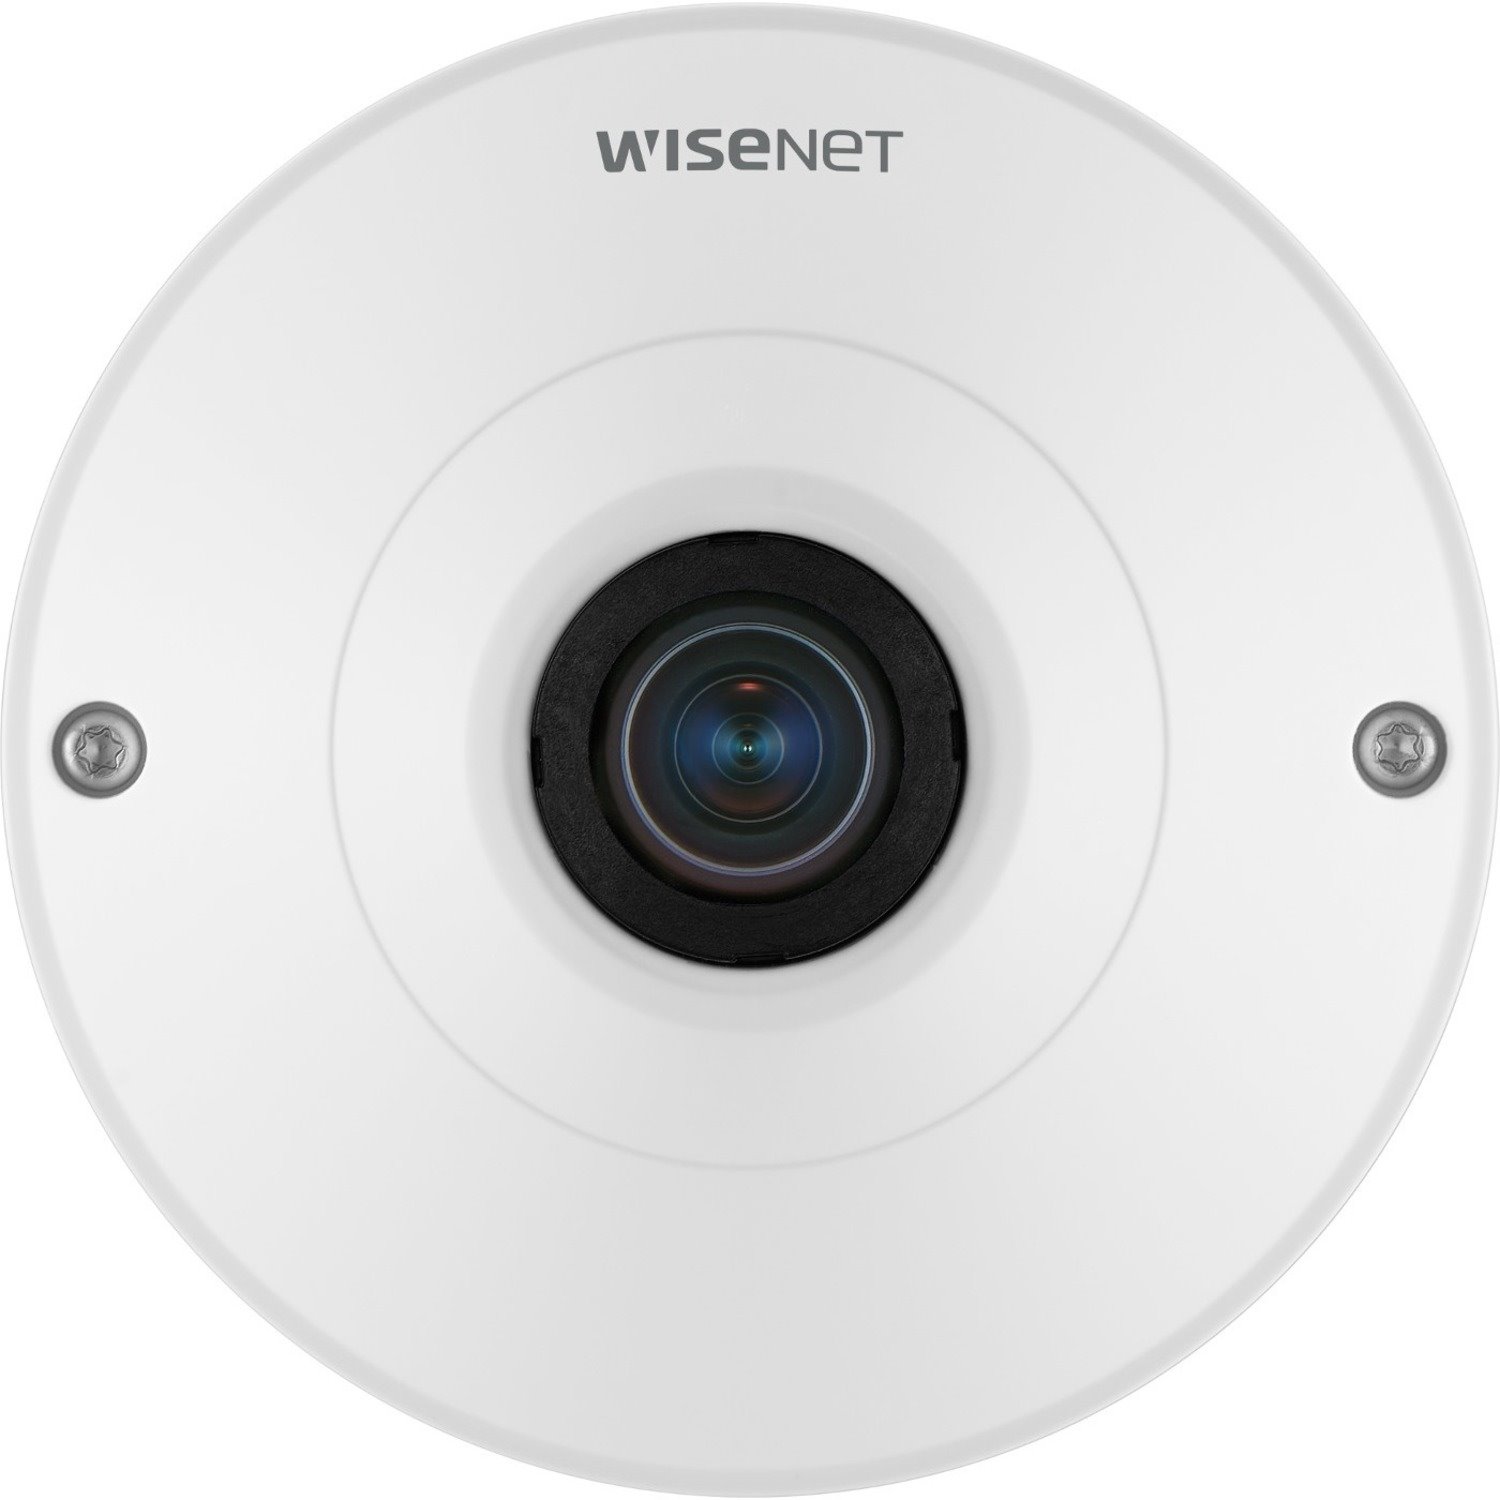 Wisenet QNF-9010 12 Megapixel Indoor Network Camera - Colour - Fisheye - White